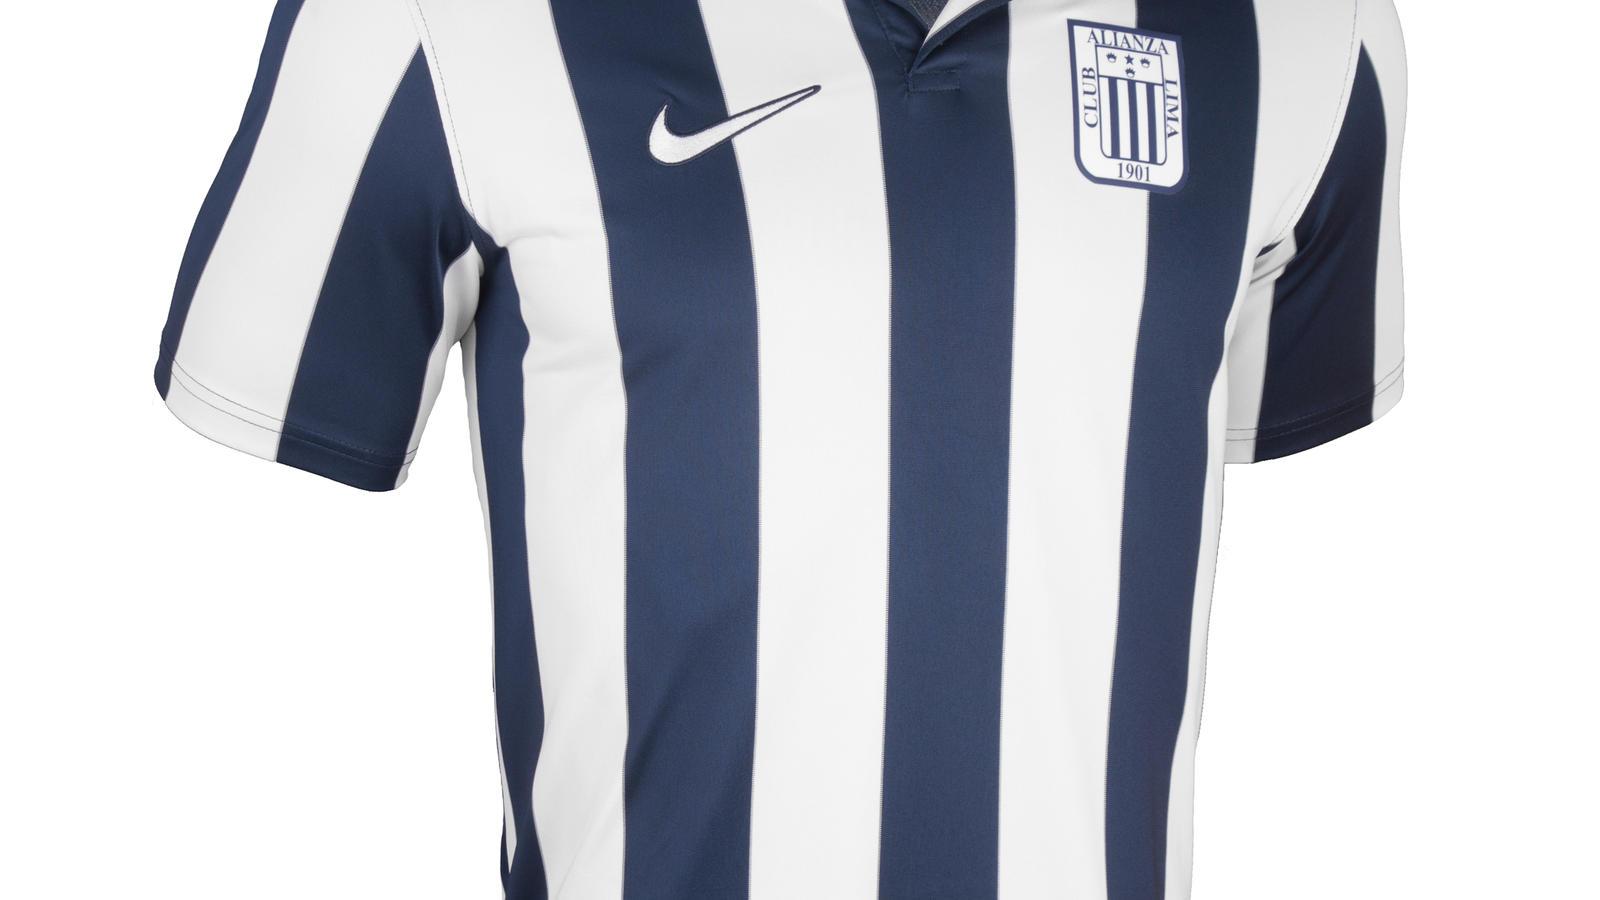 Nike introduces new Alianza Lima kit for the 2013 season